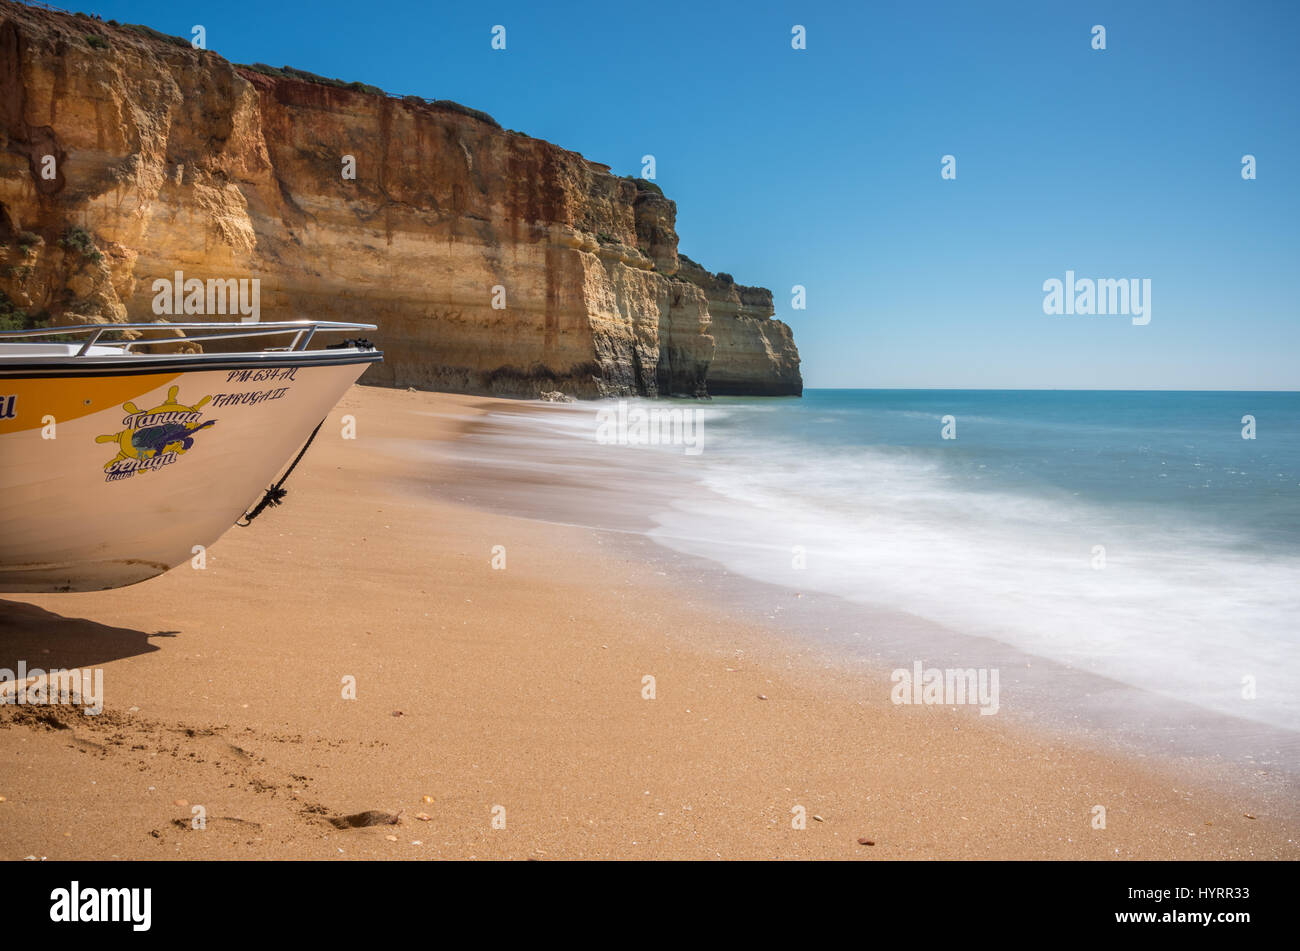 Praia de Benagil, Algarve, Portugal. Stock Photo